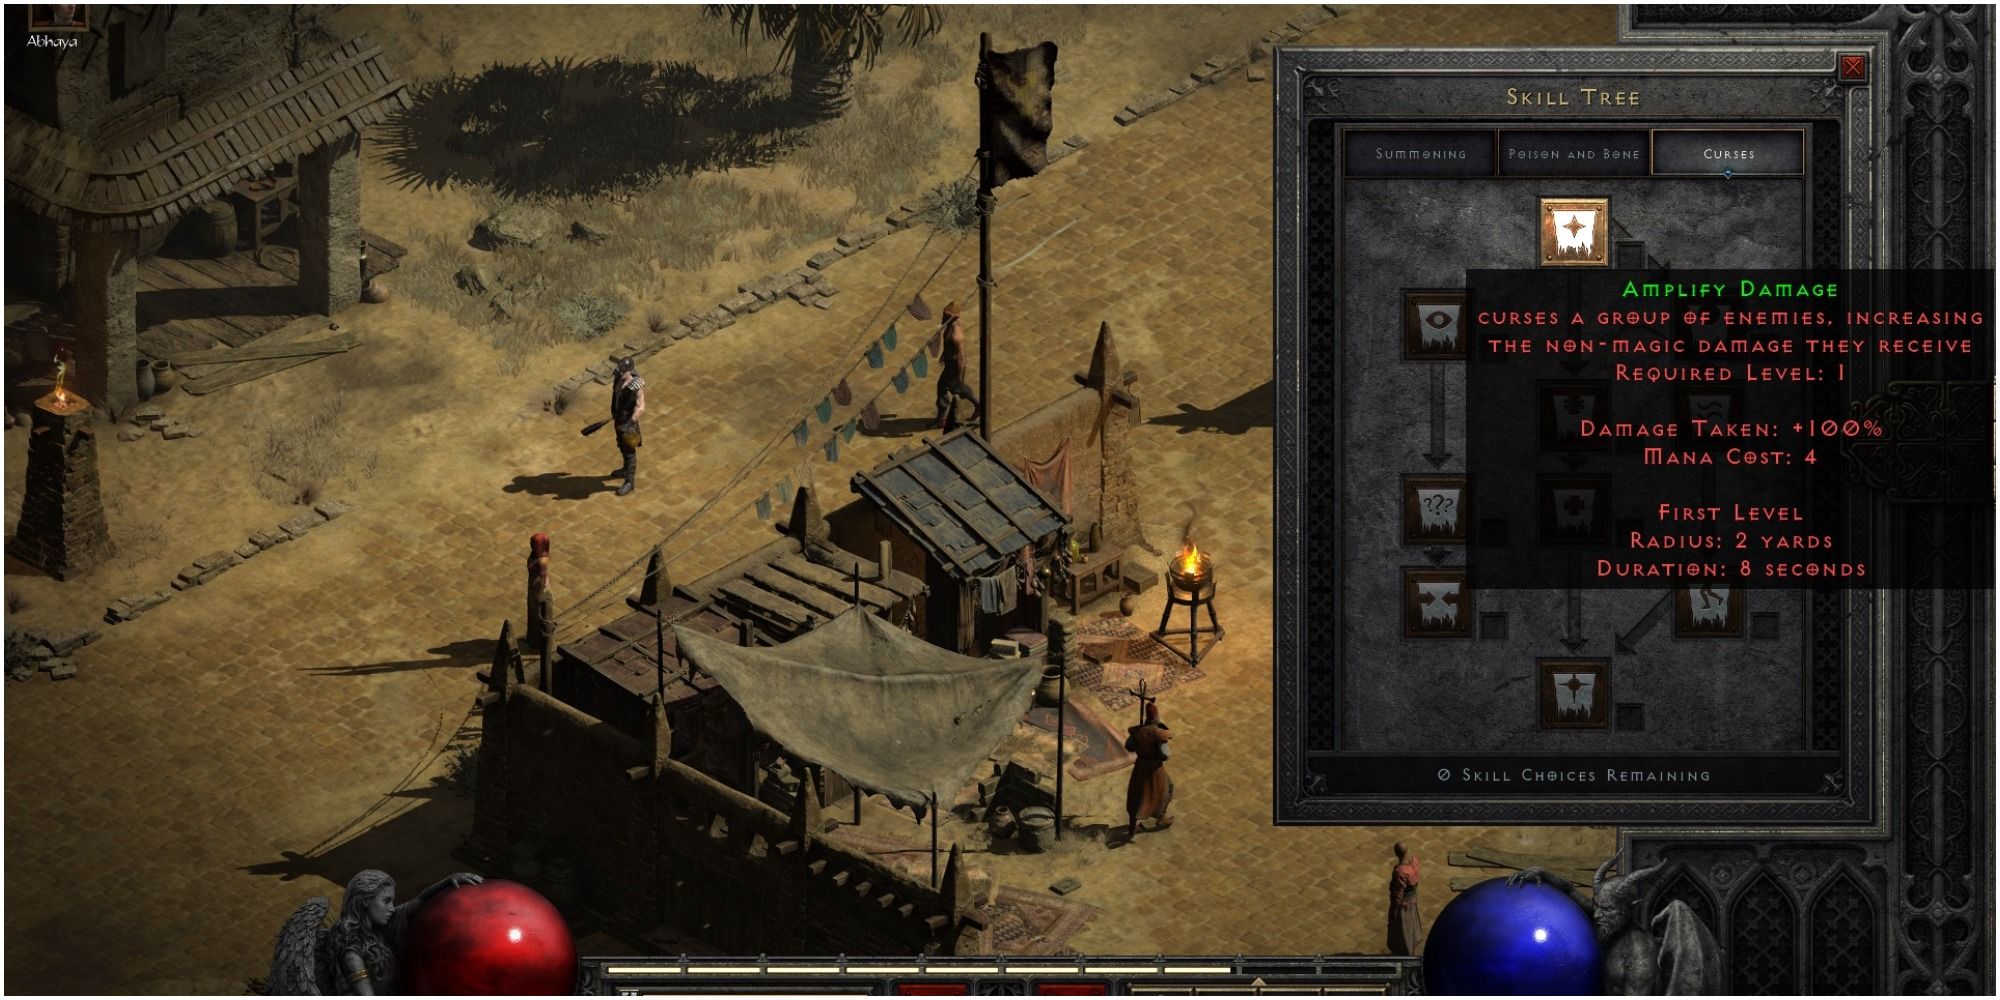 Diablo 2 Resurrected Amplify Damage Description At Level One